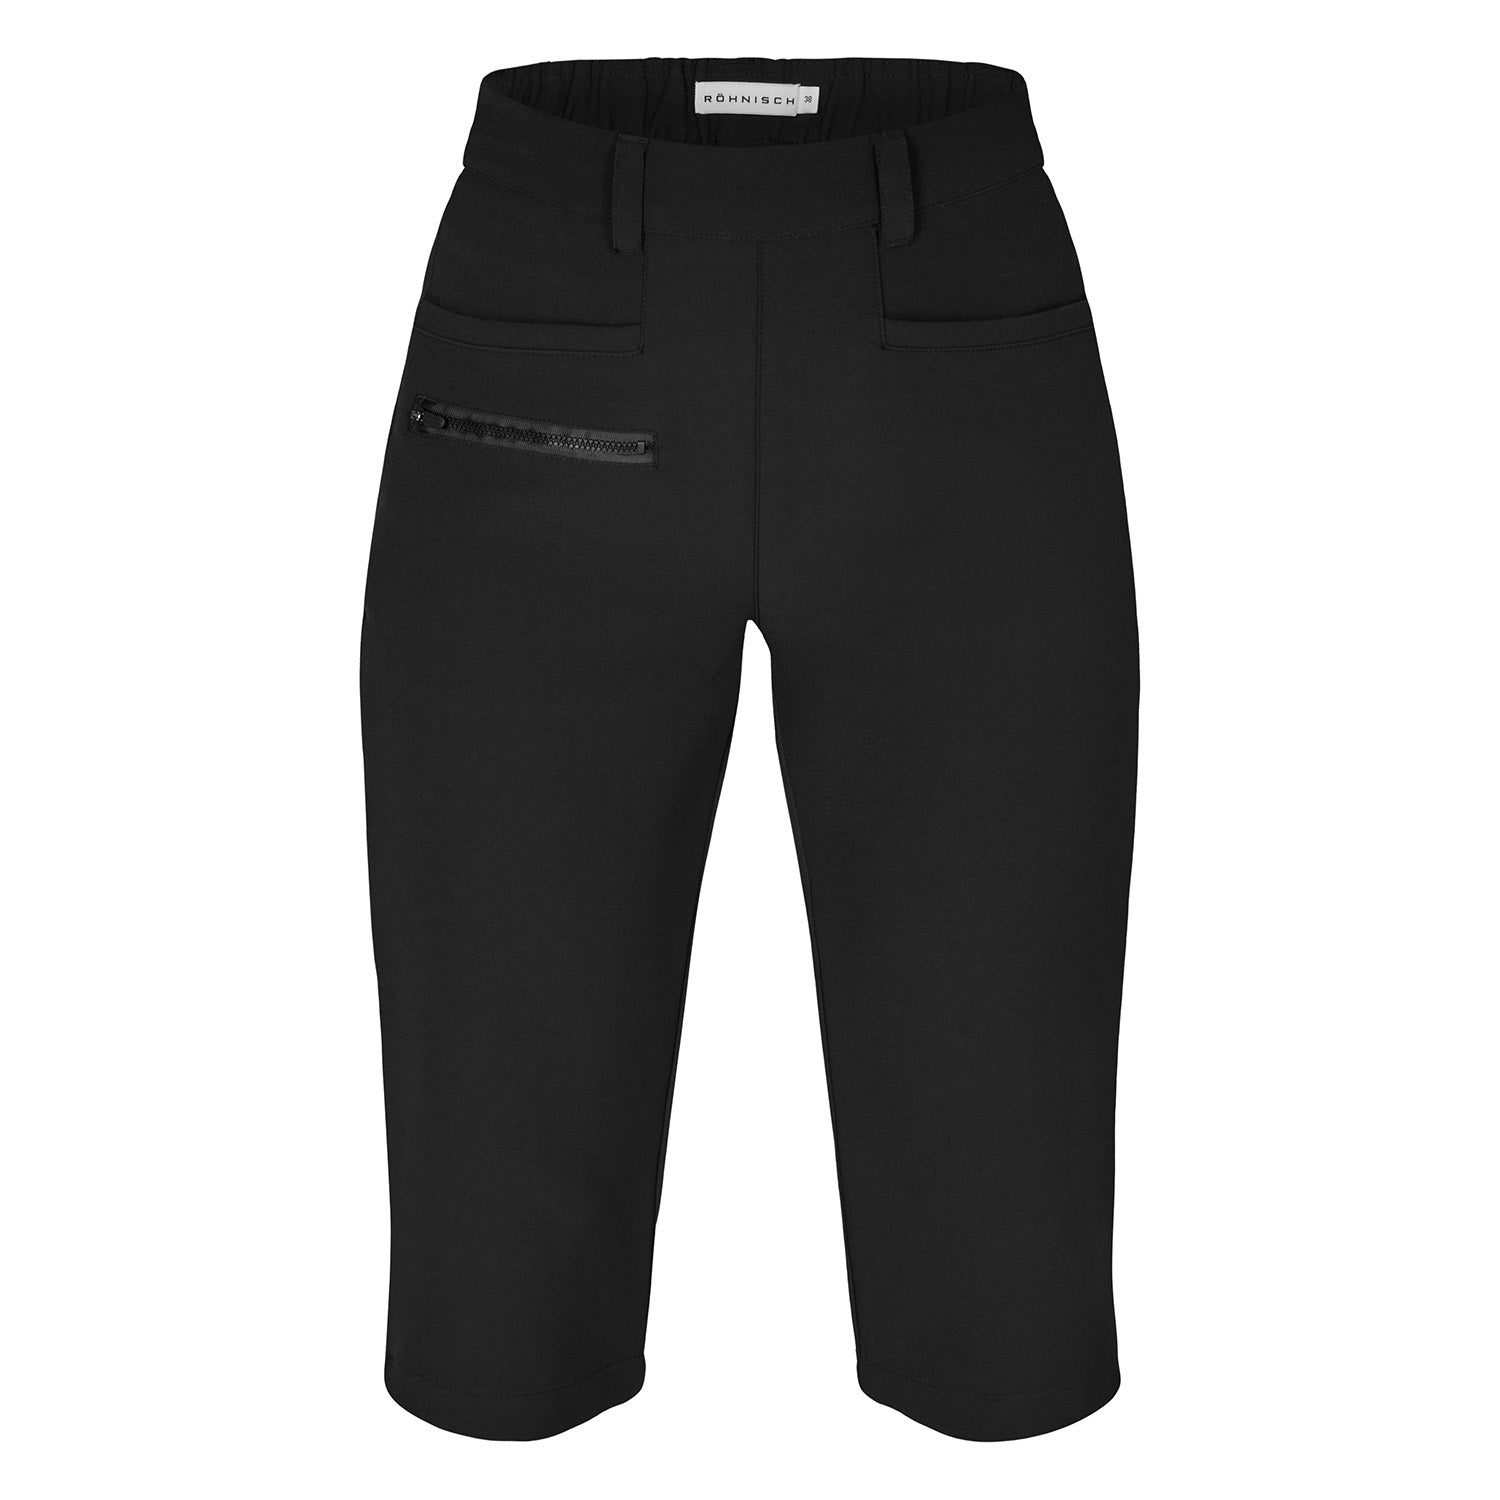 Rohnisch Ladies Chic Pull-On City Shorts in Black